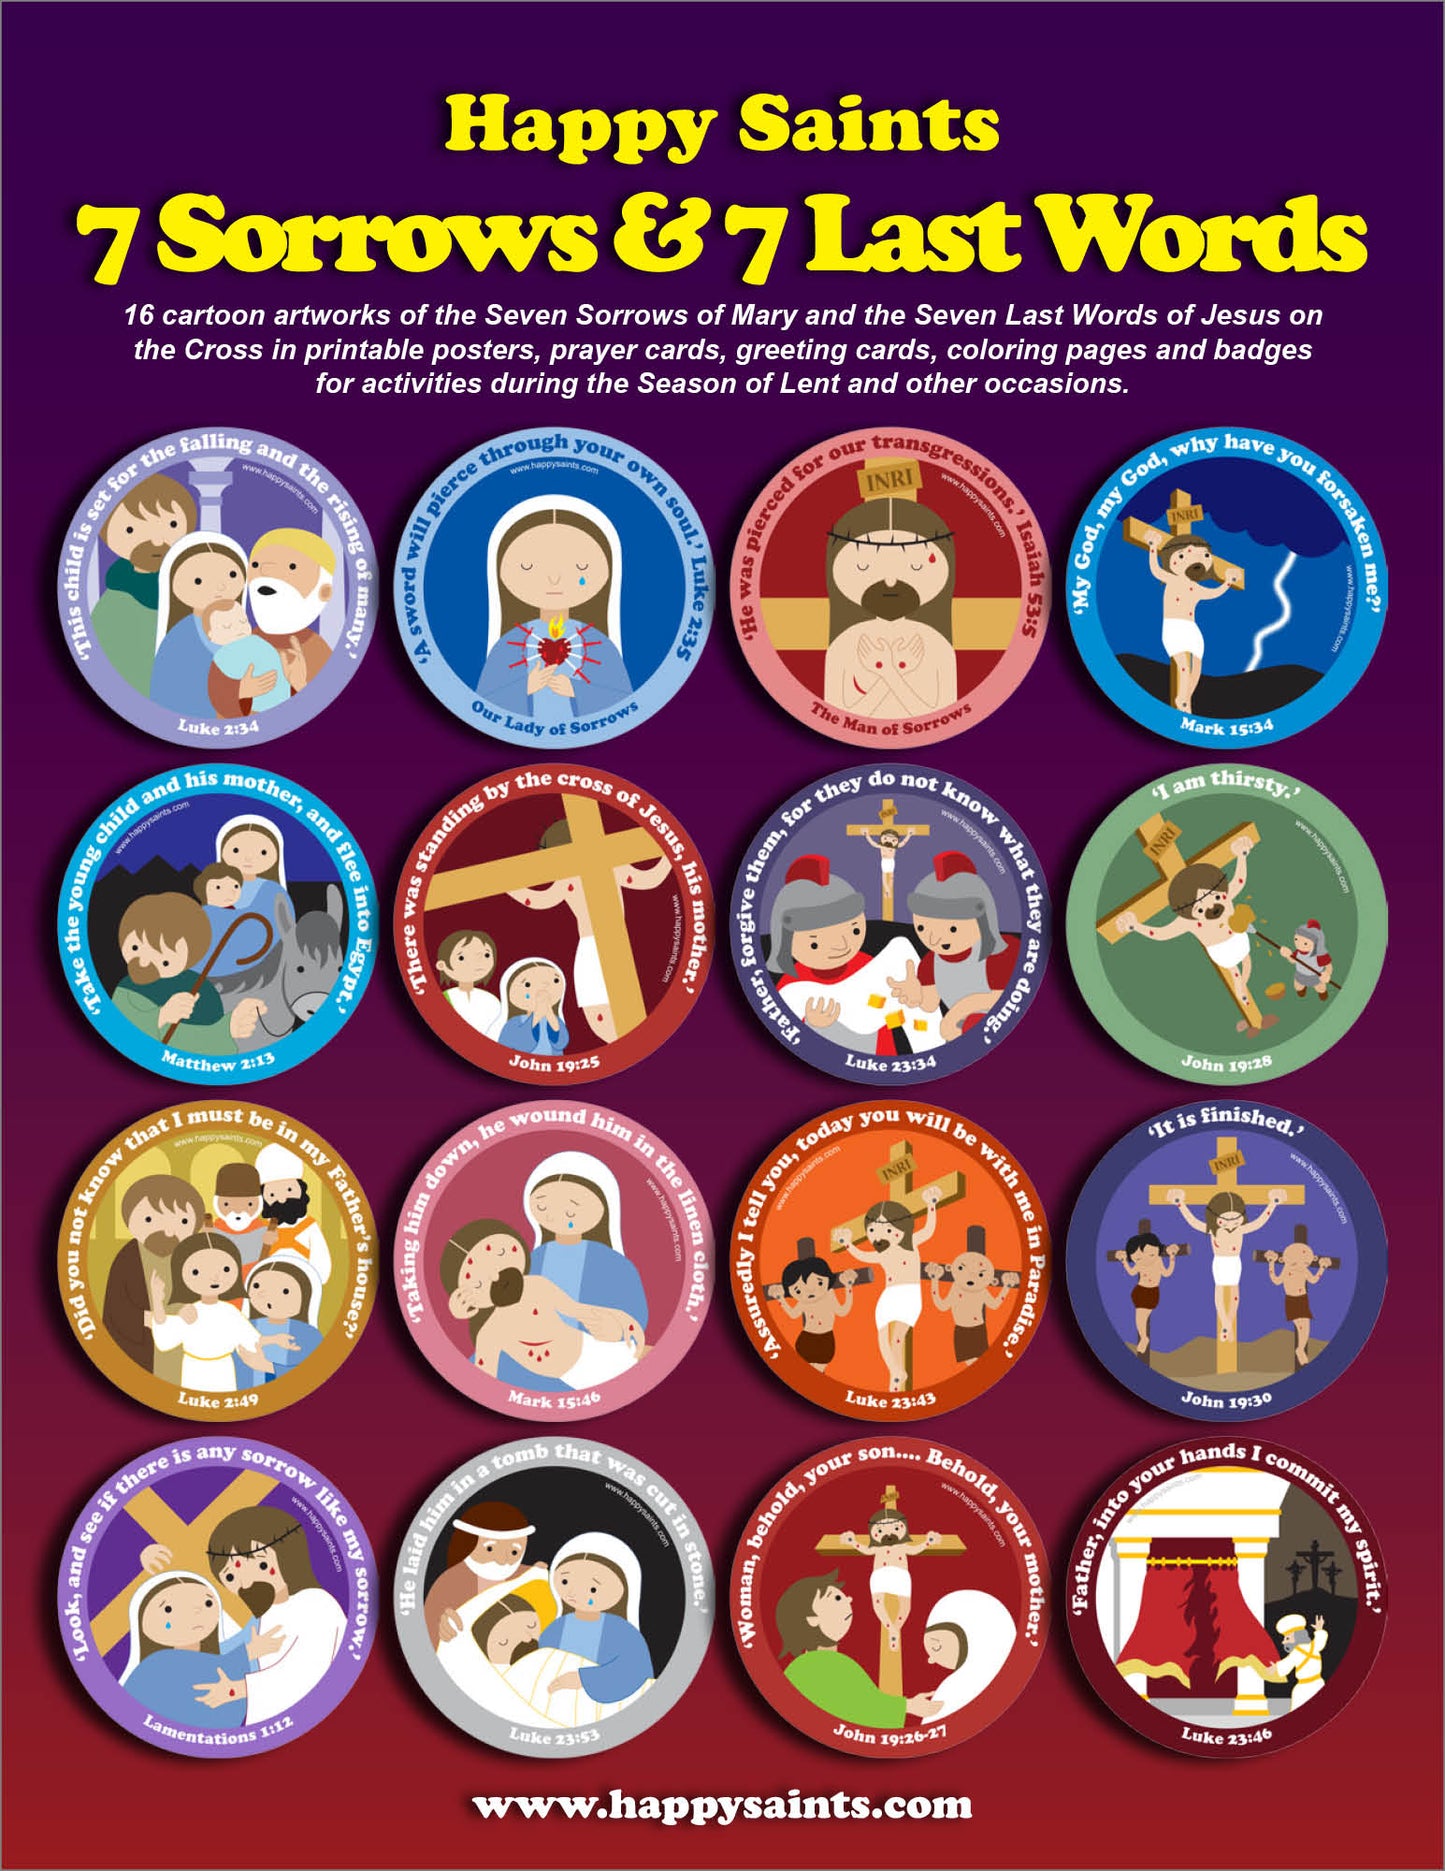 7 Sorrows & 7 Last Words